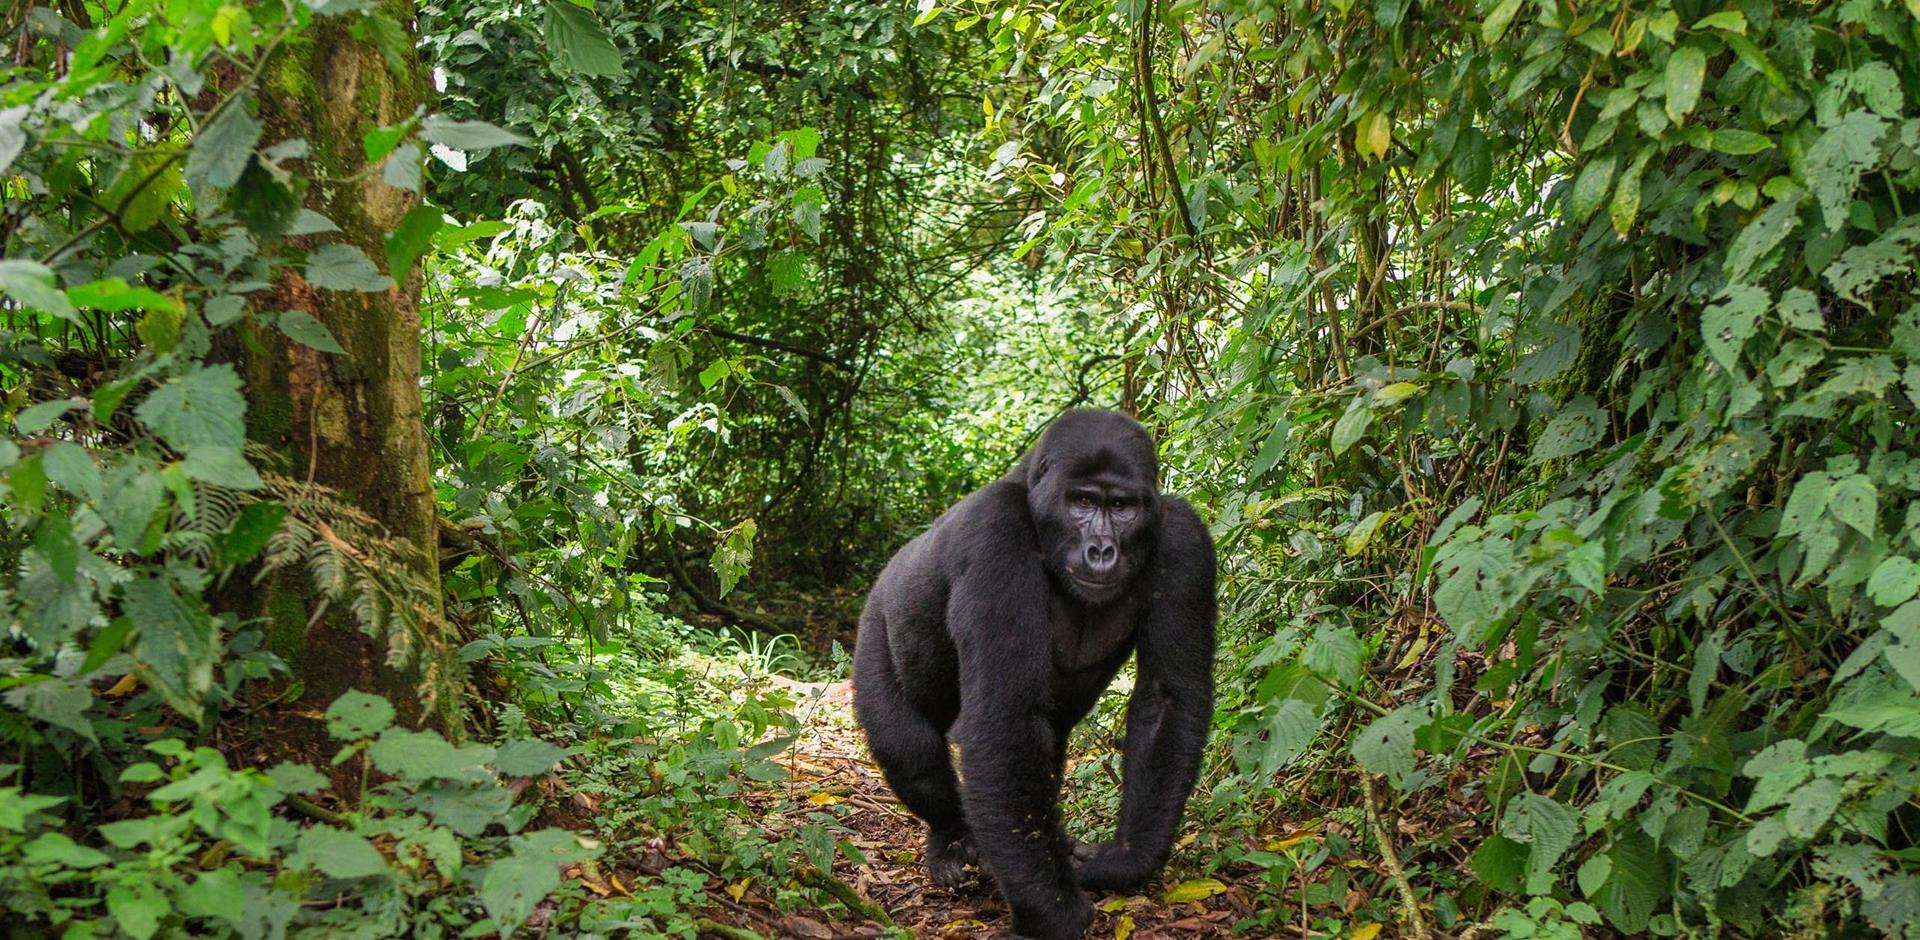 Uganda, Africa